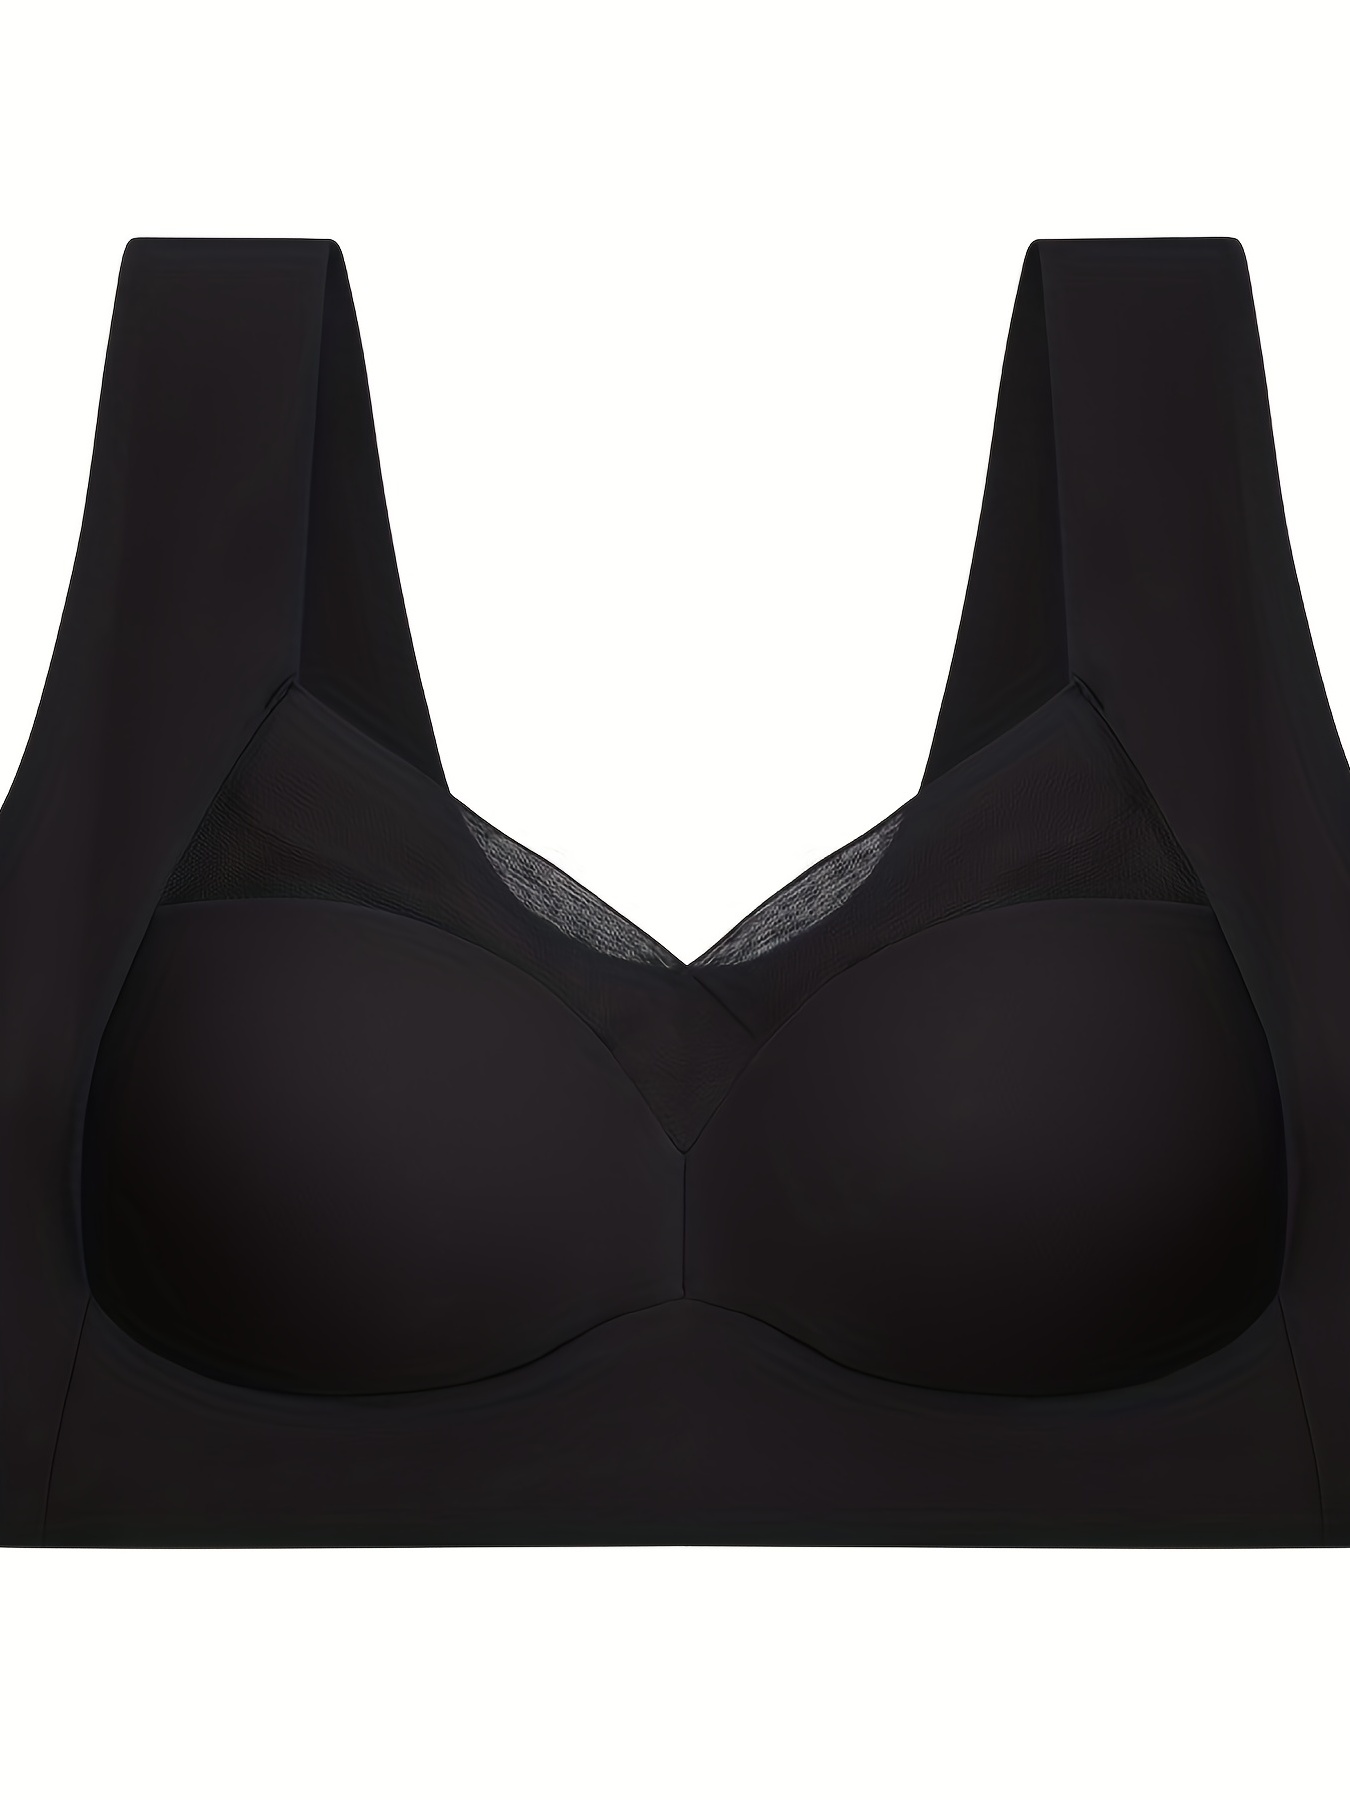 XFLWAM Comfortable Bras for Women Push Up Soft Everyday Padded Bra No  Underwire Adjustable Straps Underwear Bras Khaki XL